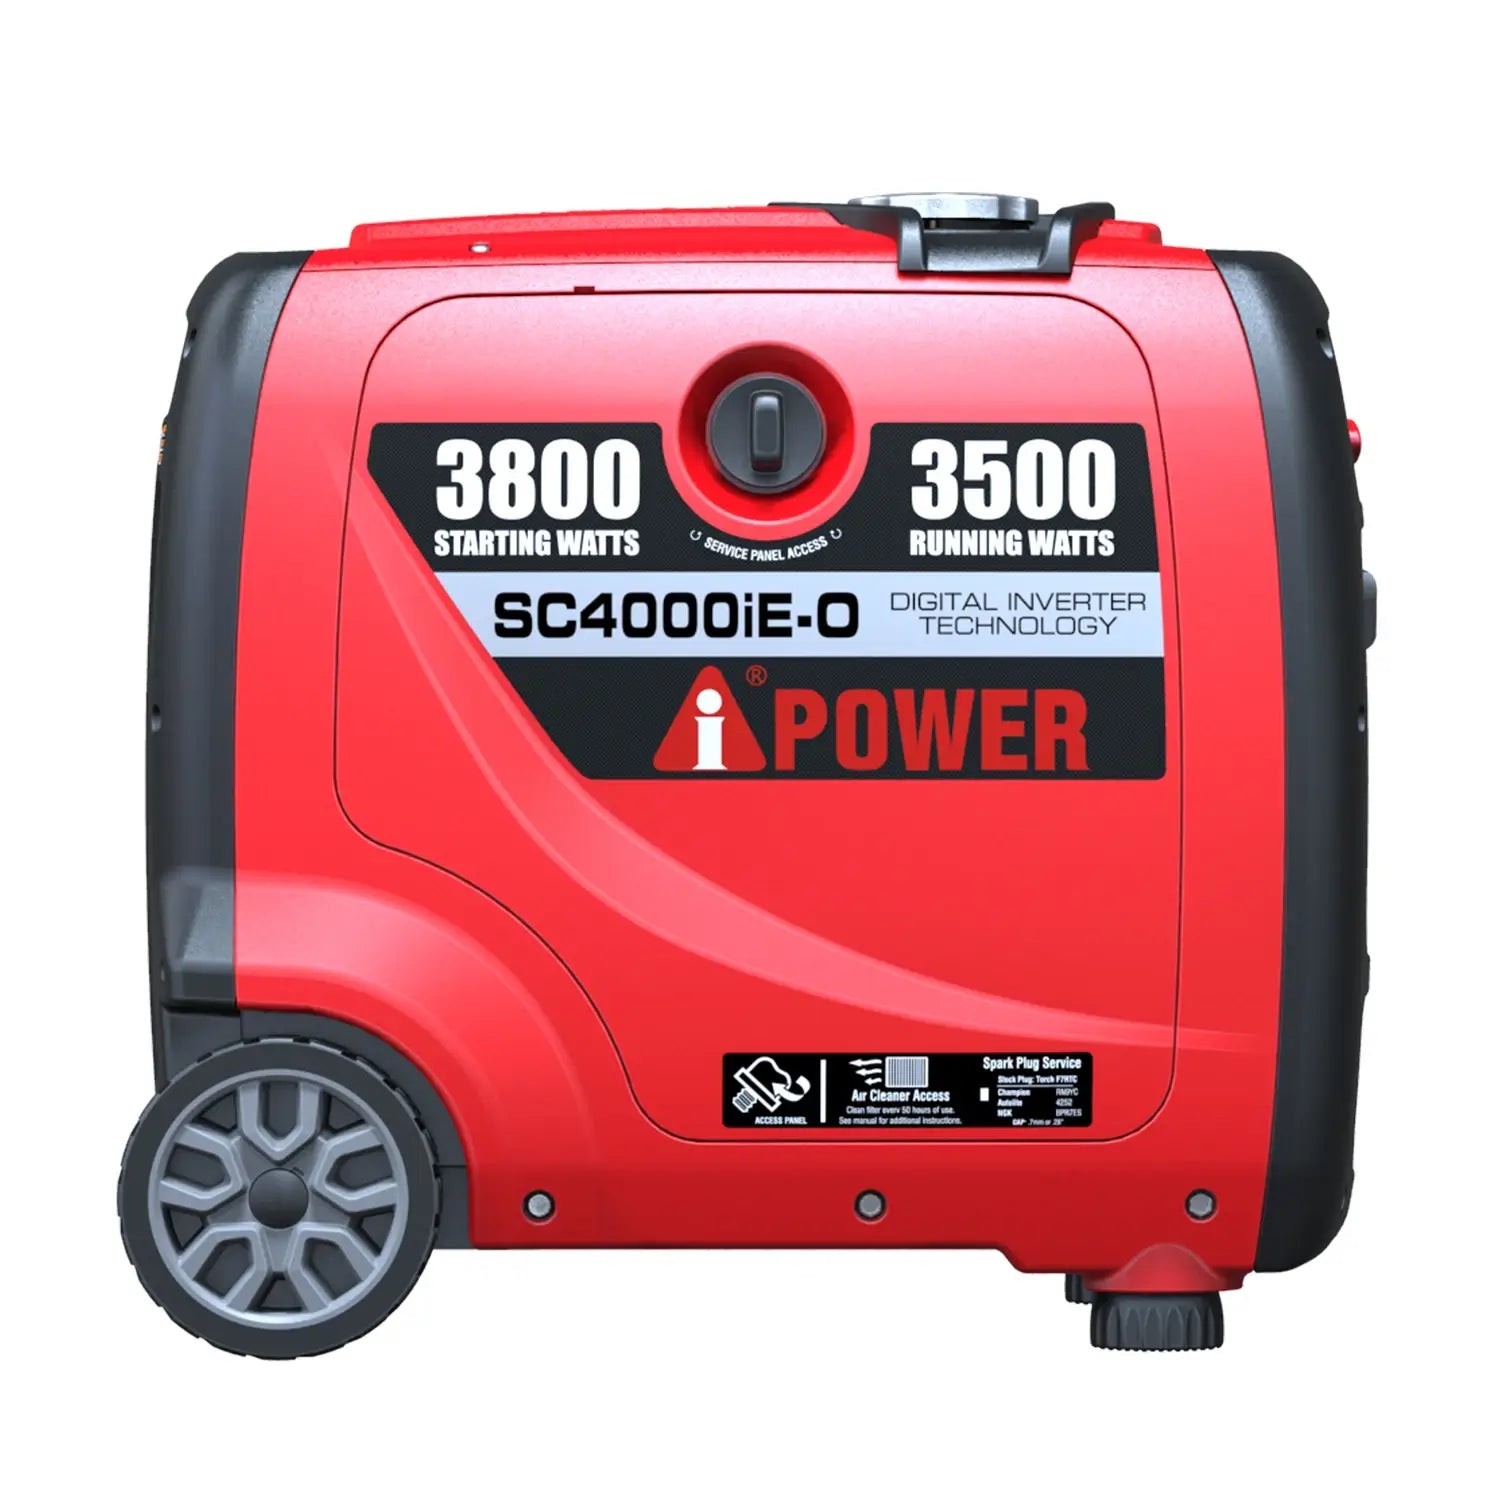 A-iPower Inverter Generator - 3800 Watt Portable Telescoping Handle Super Quiet Gasoline Powered